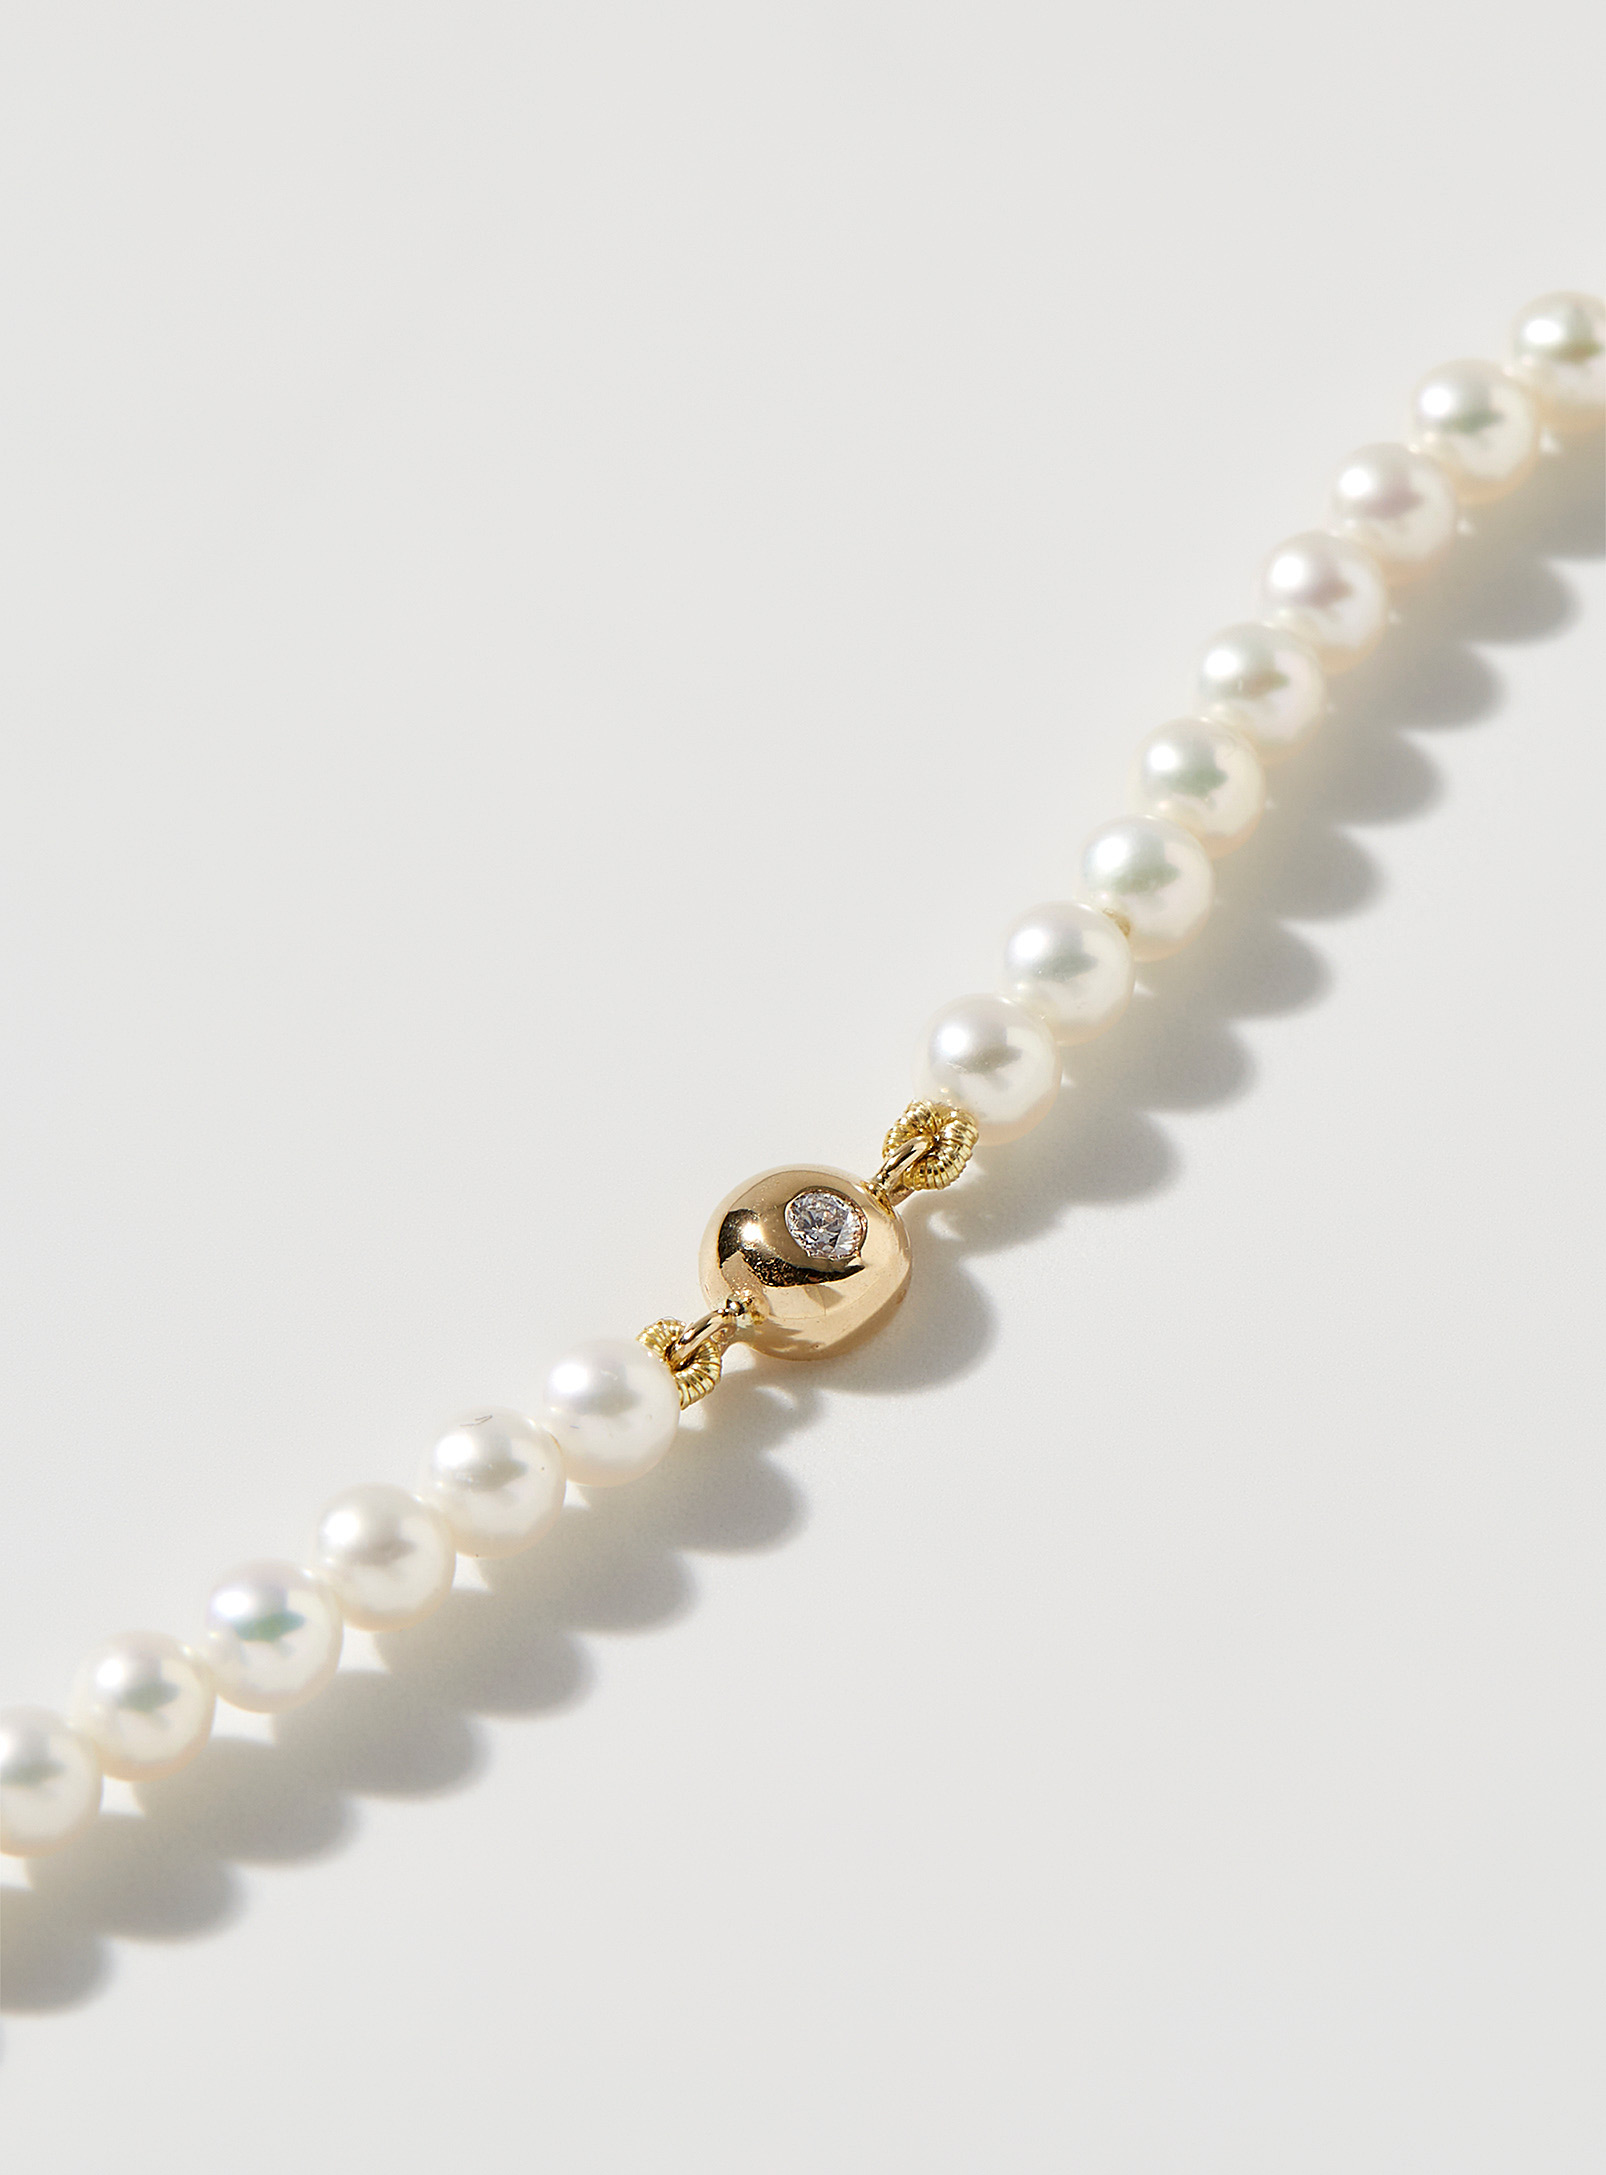 Poppy Finch - Le bracelet de perles minidiamant